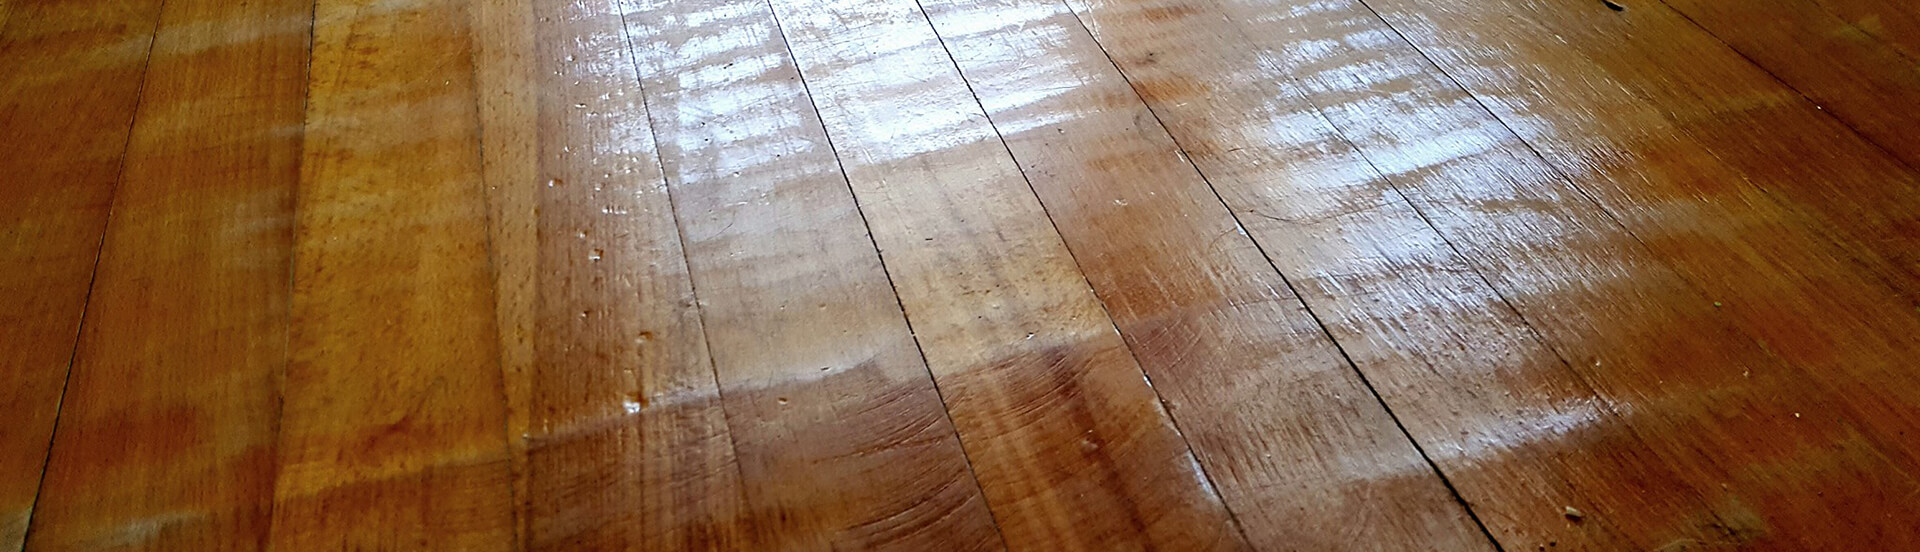 Bad sanding job by unskilled floor company